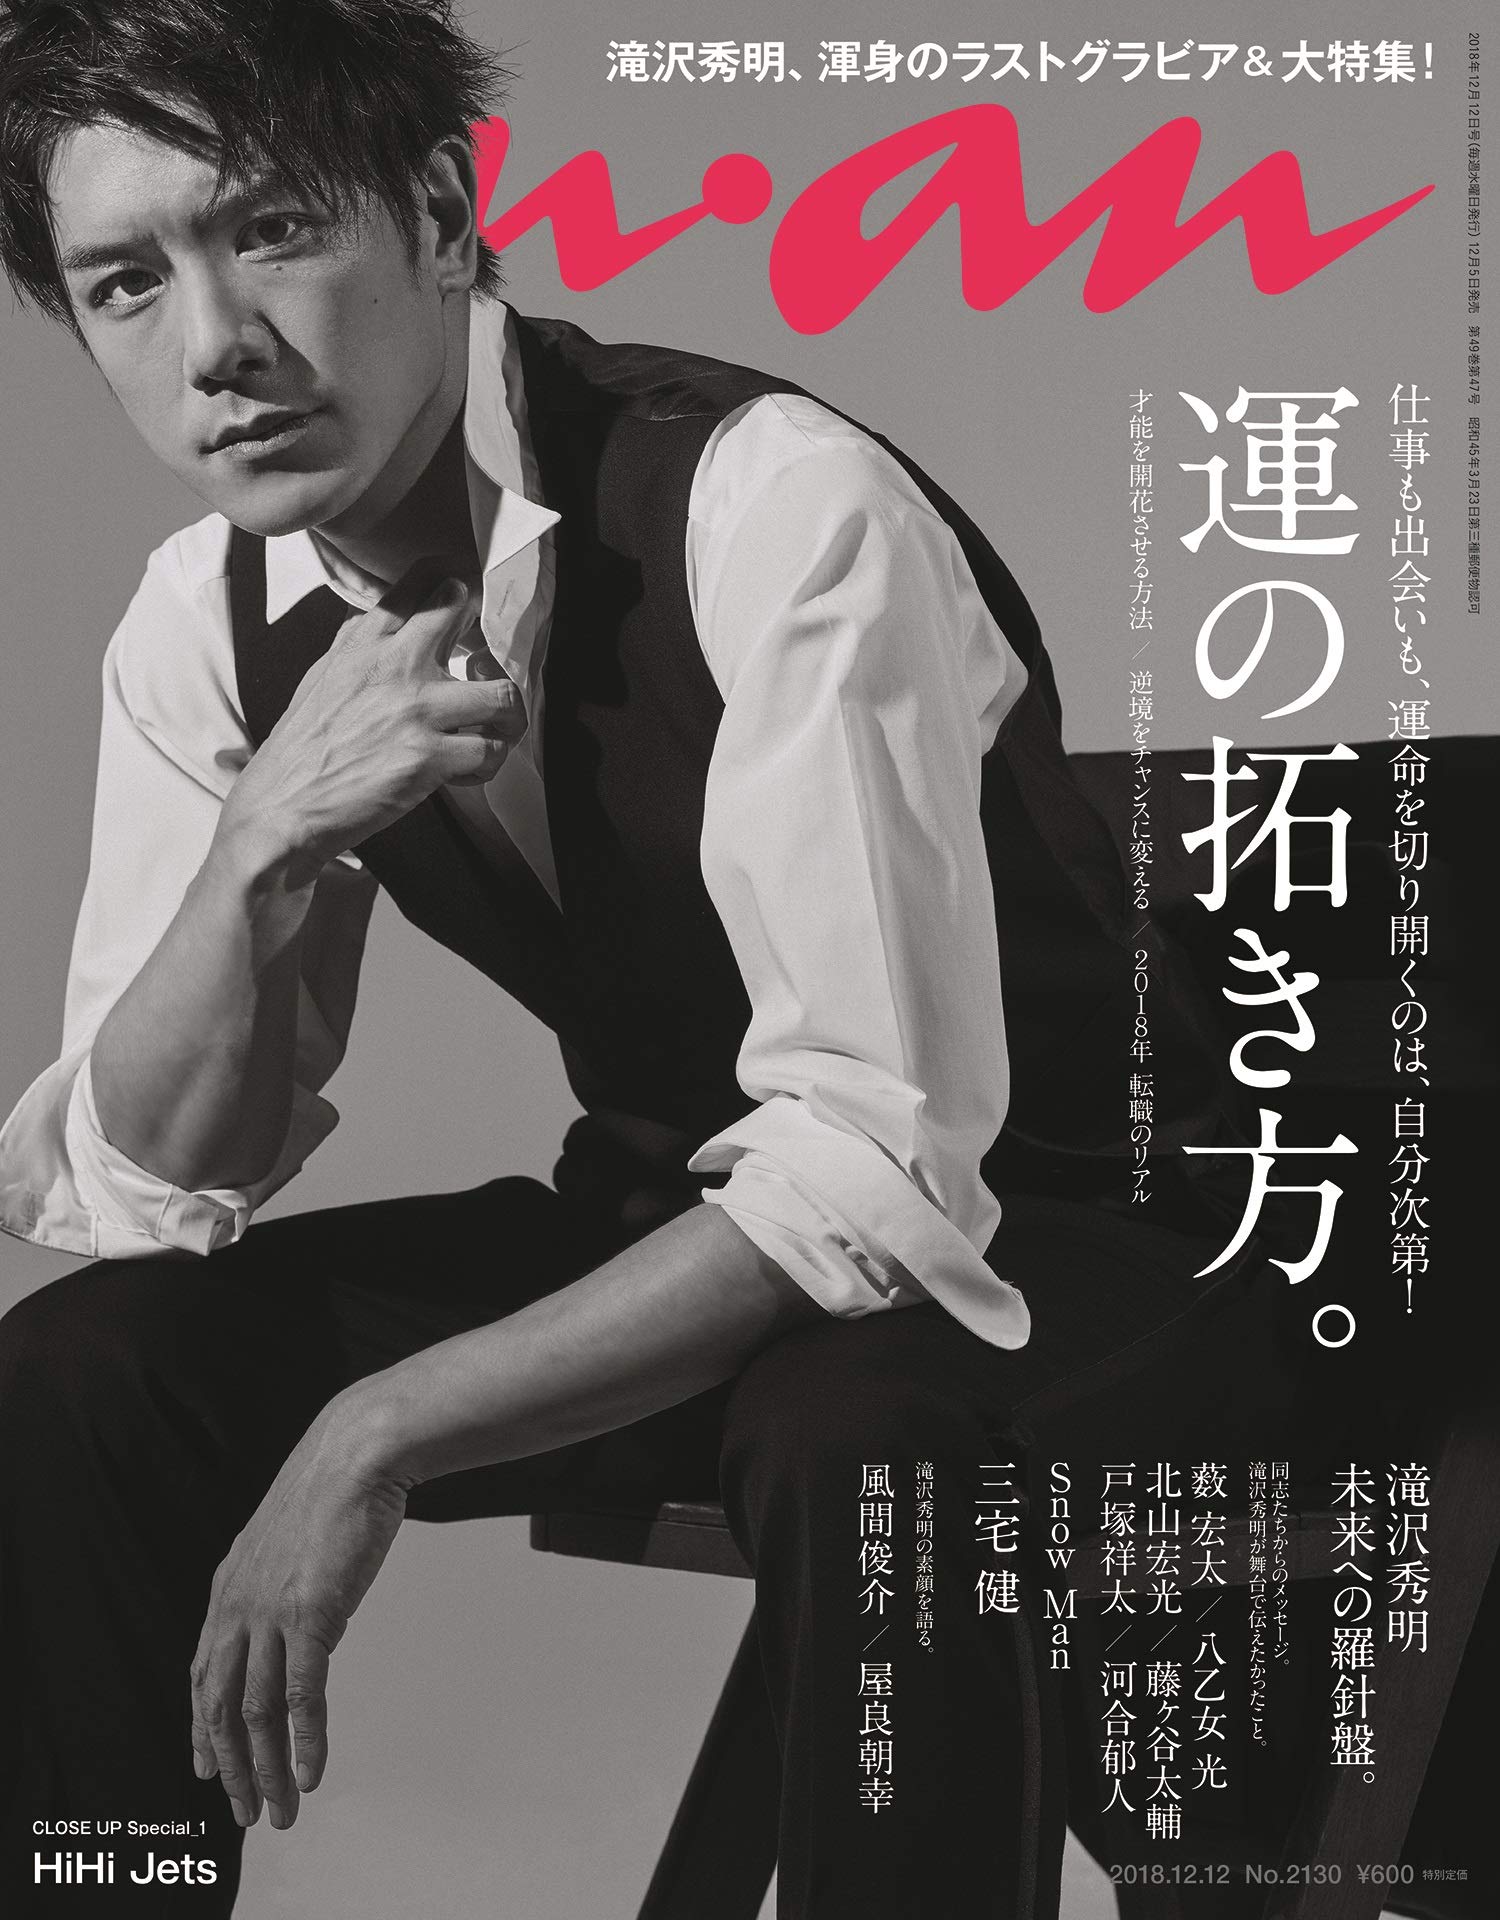 Takizawa Hideaki to grace cover of ã€Œananã€ magazine